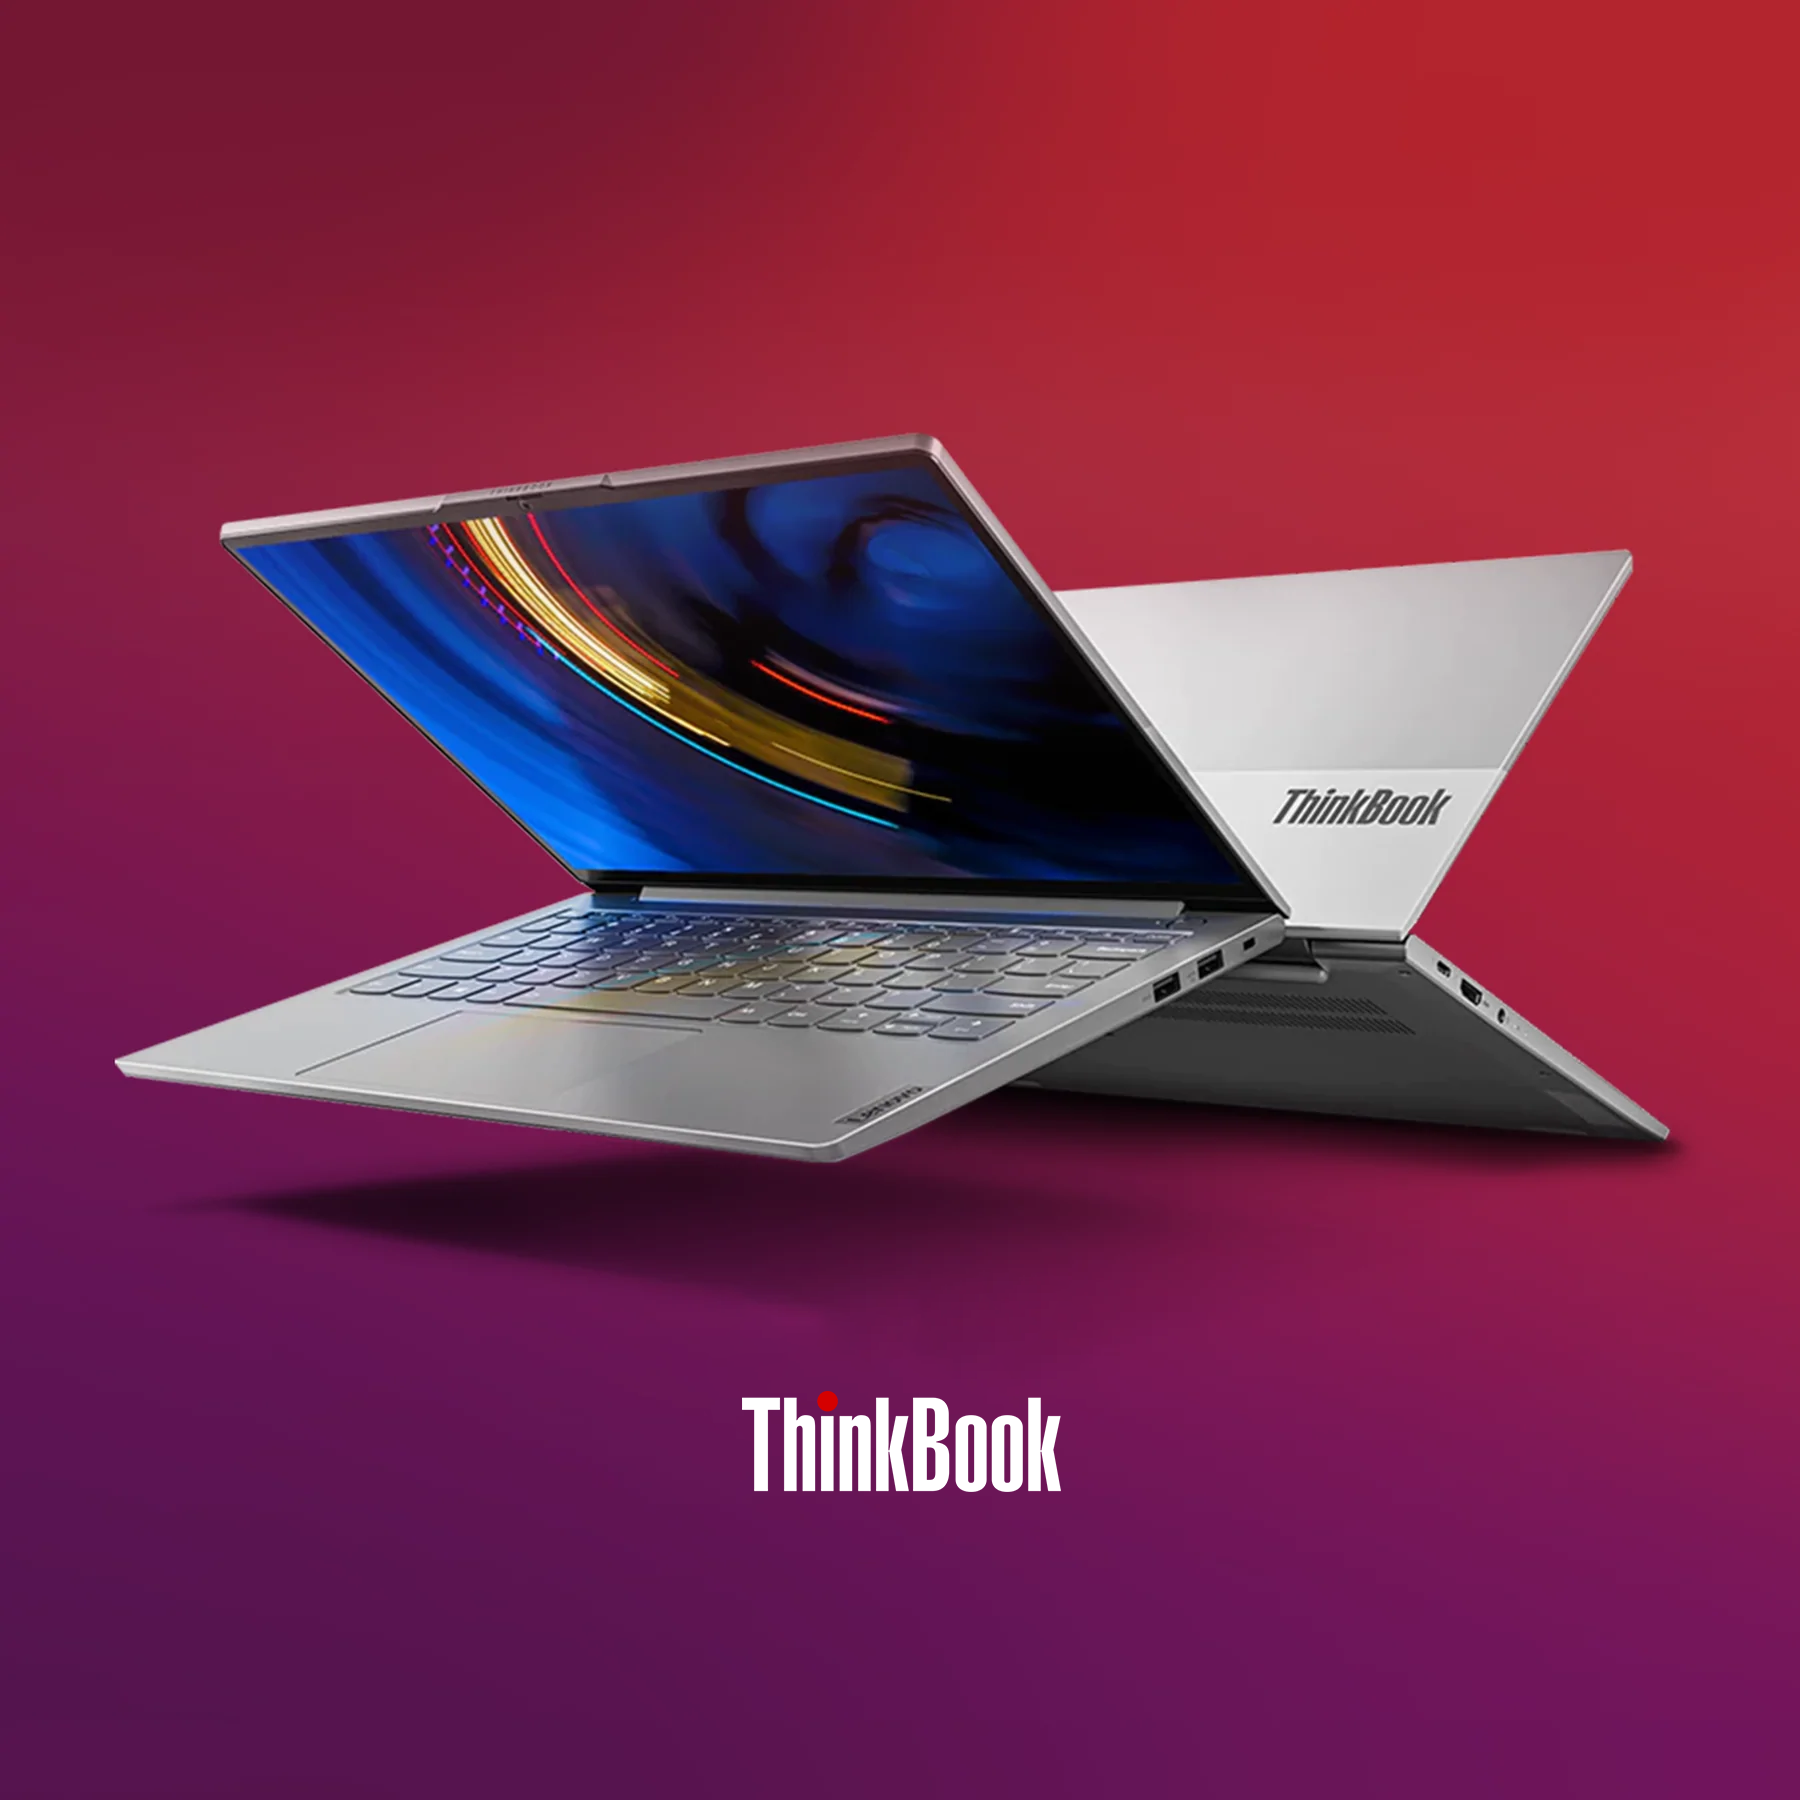 lenovo-thinkbook-laptop